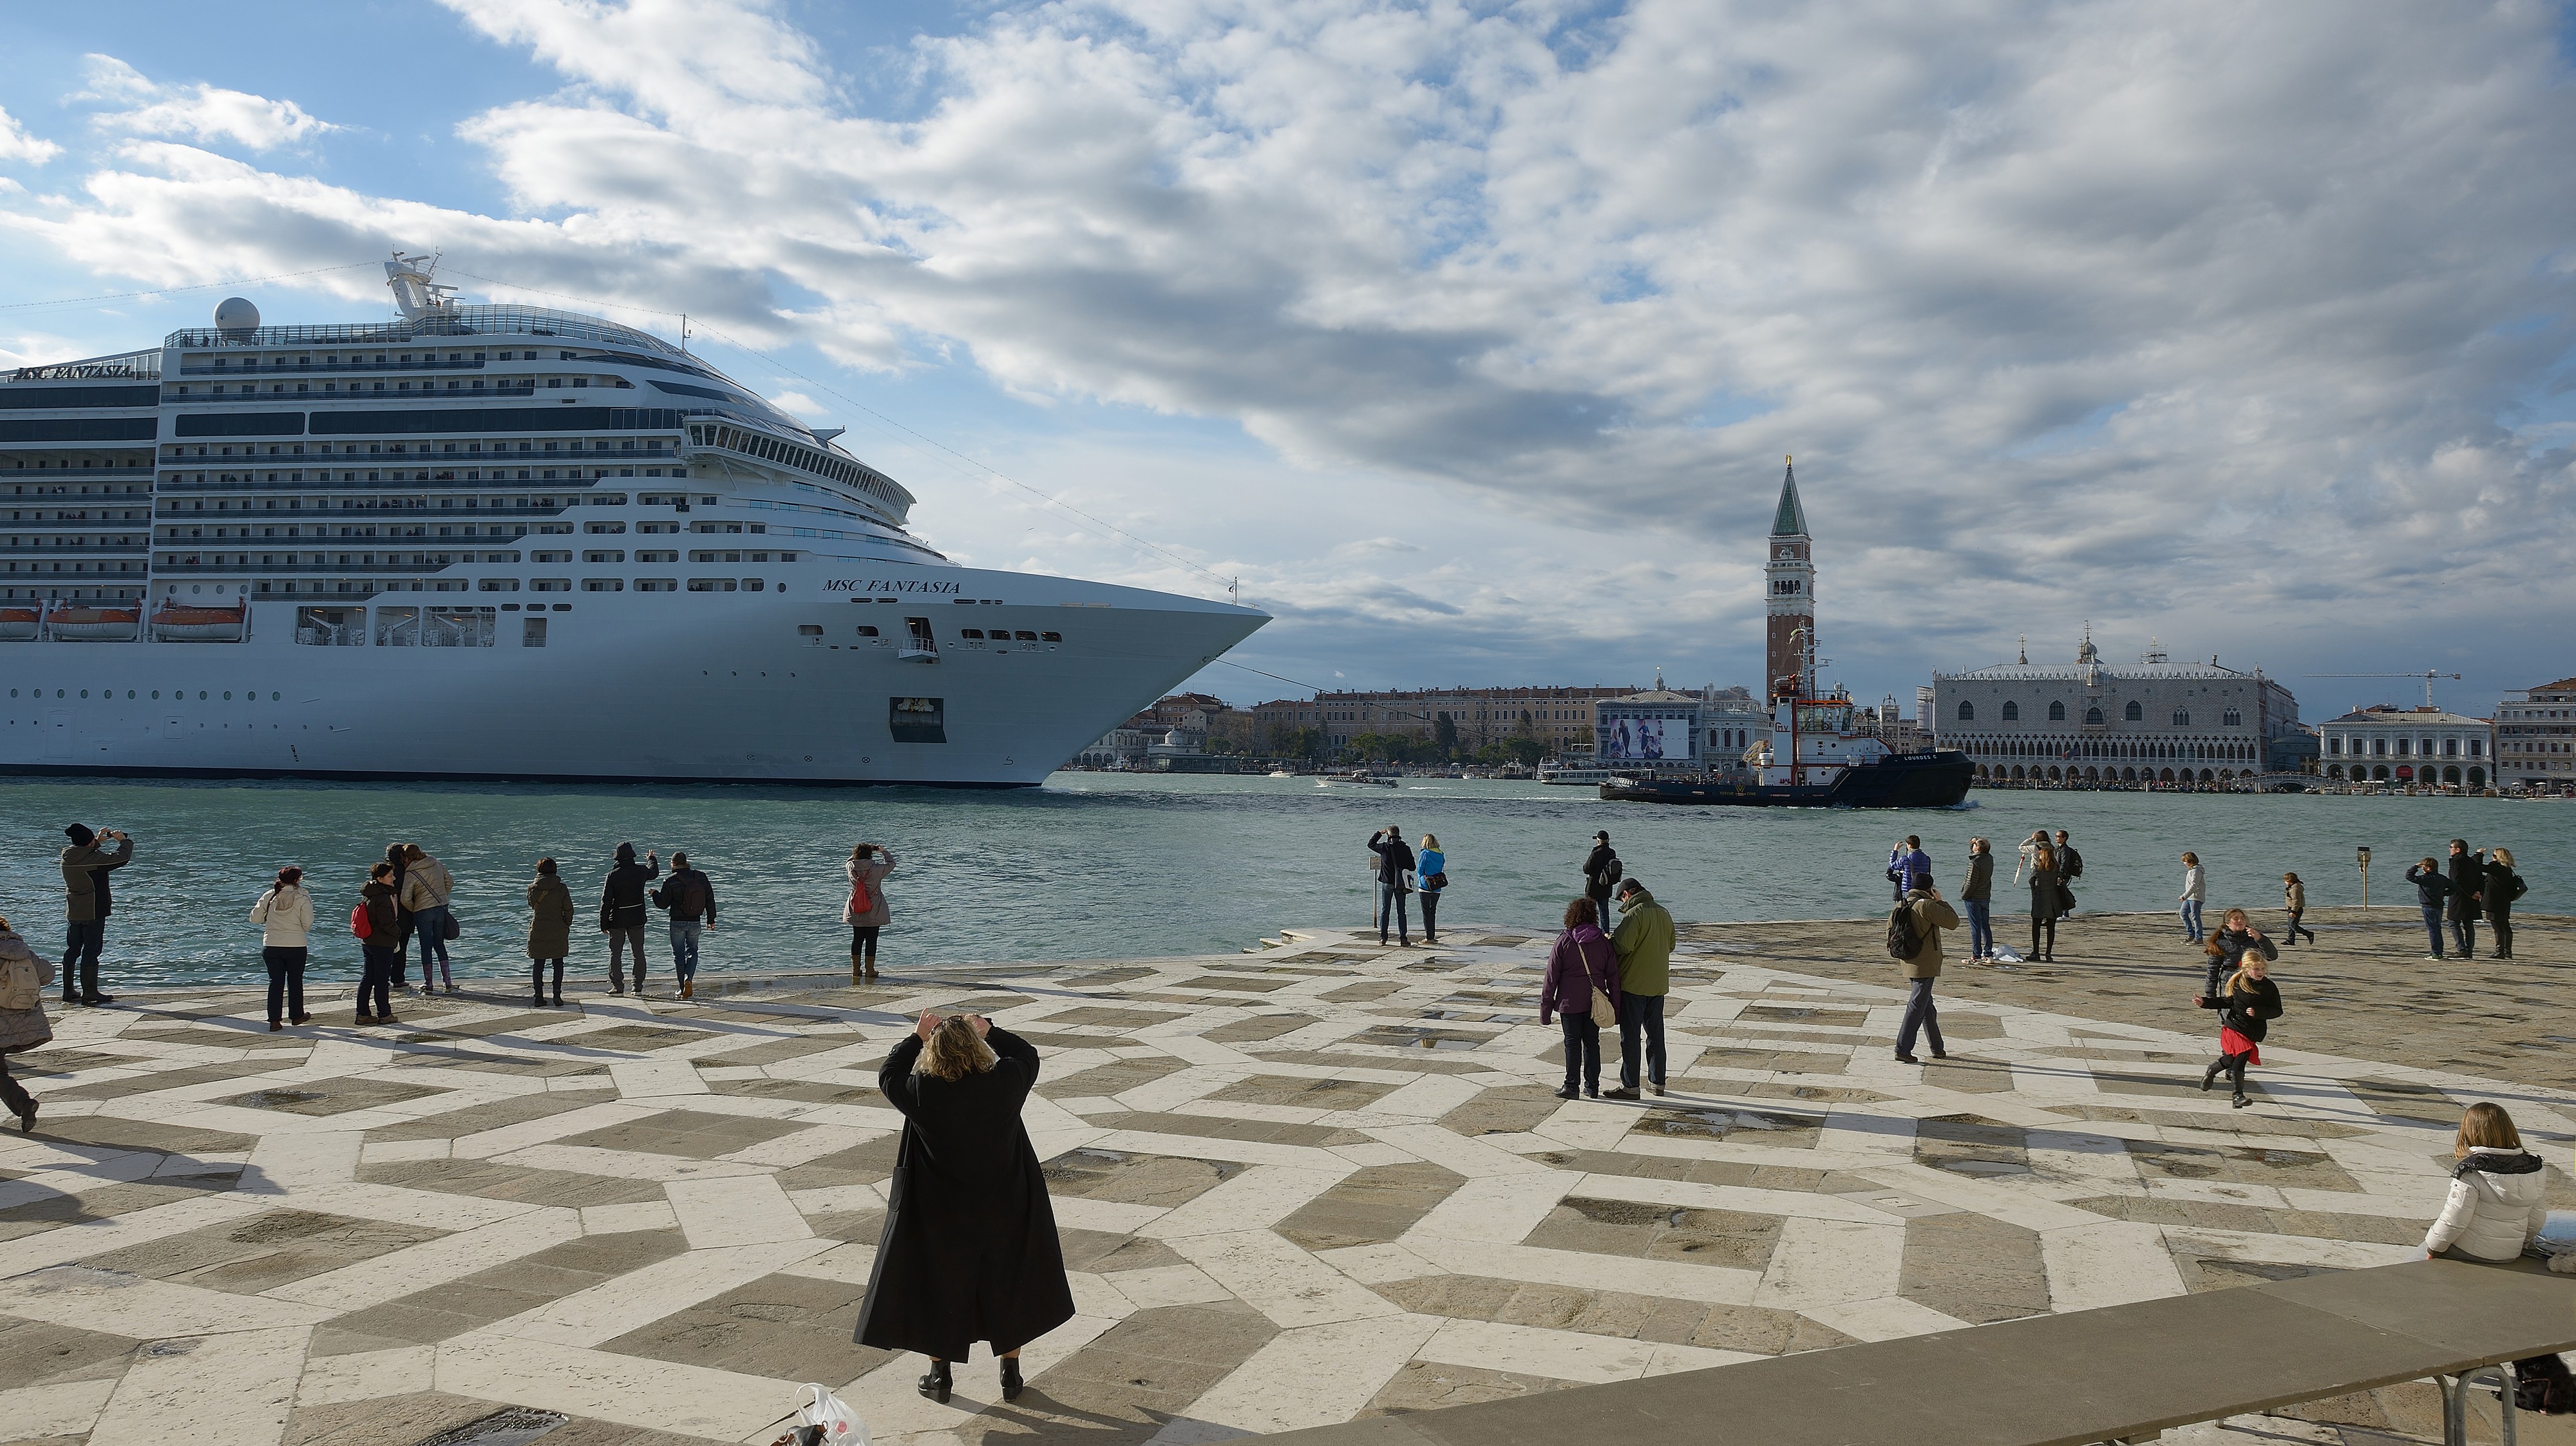 Cruiseship invading Venice